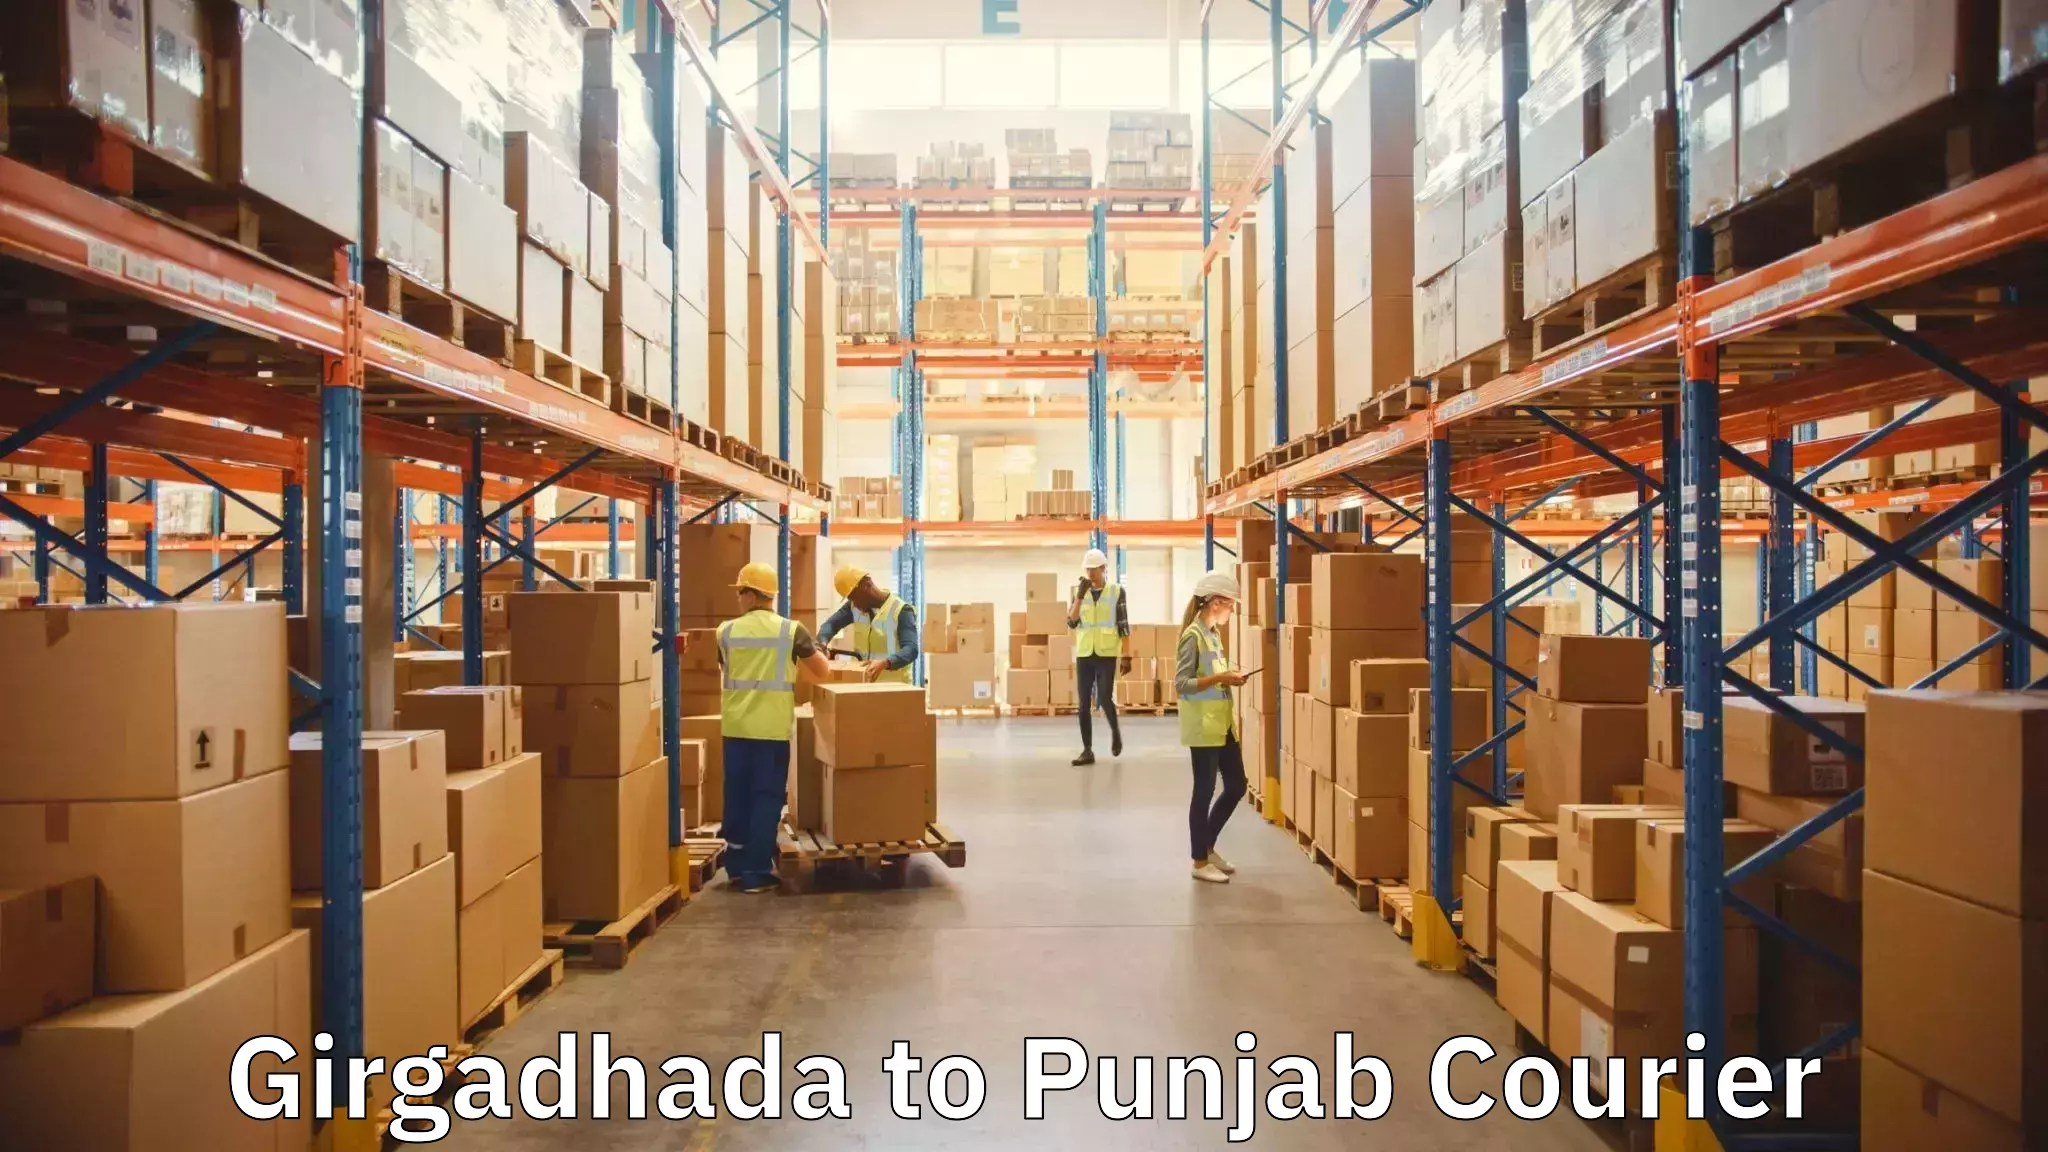 Trusted moving company Girgadhada to Anandpur Sahib